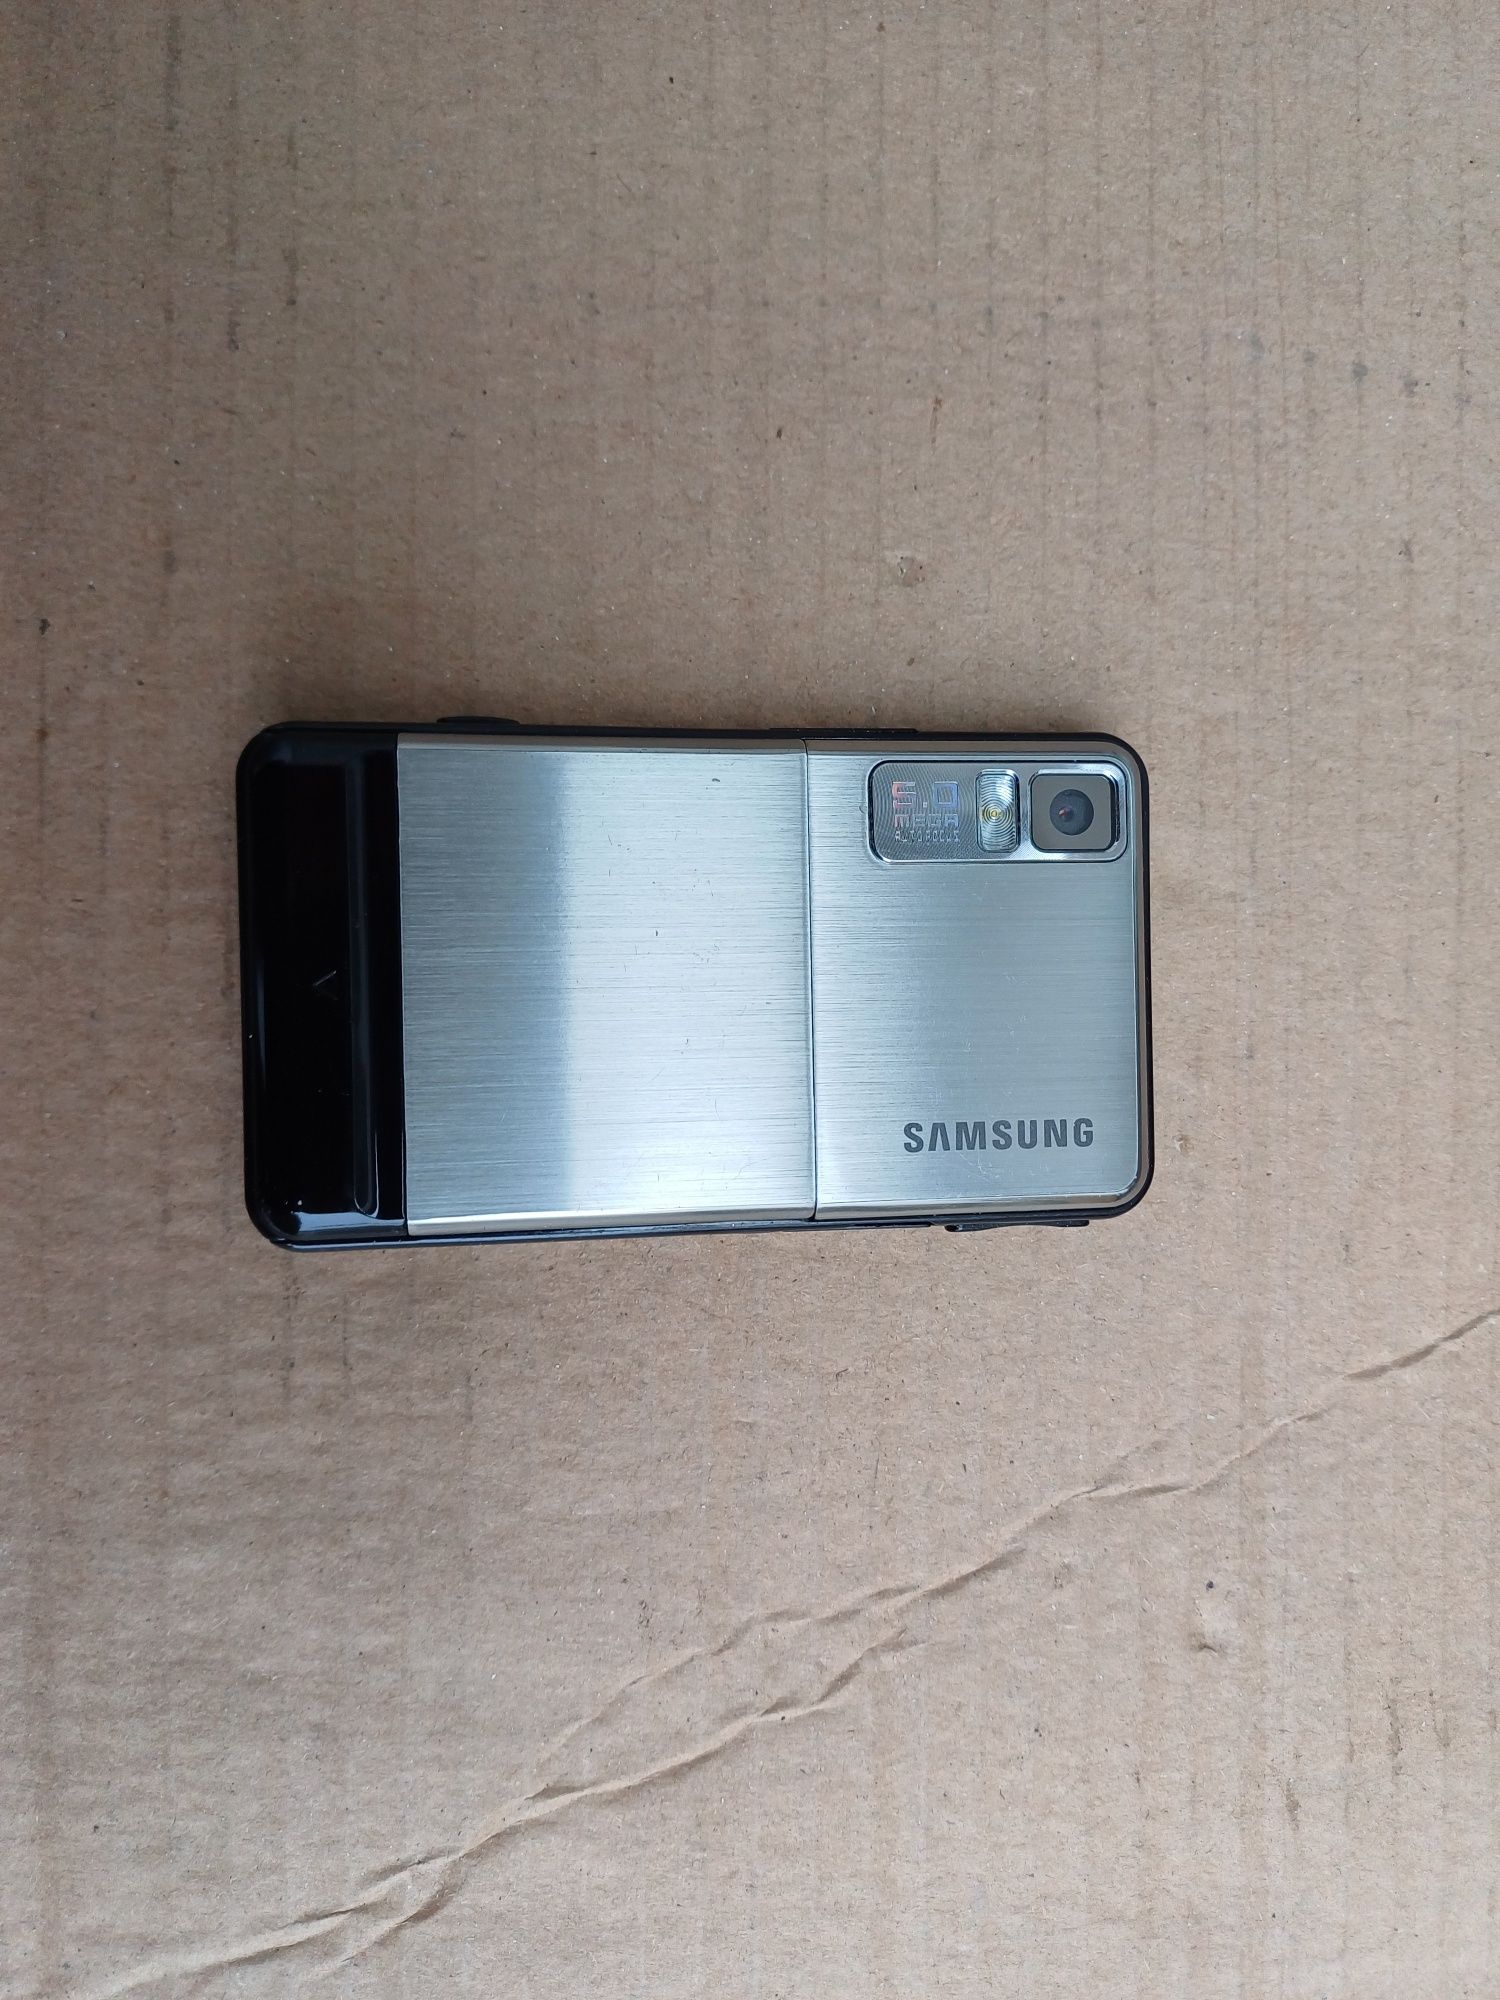 Telefon de colectie Samsung SGH-F480V in stare foarte buna.